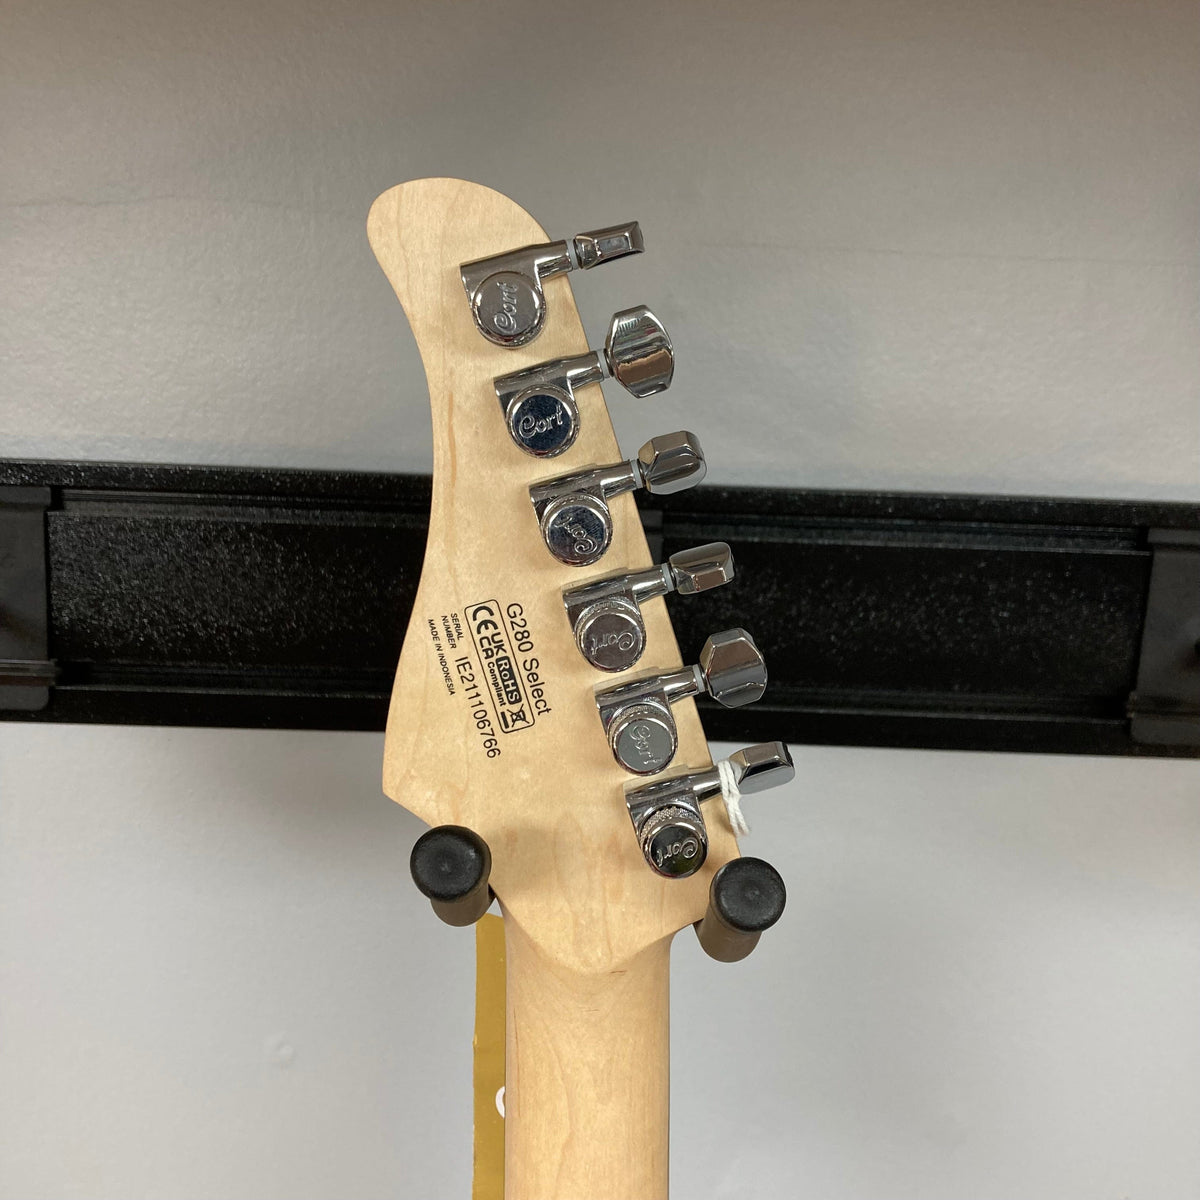 Cort G280 Select Amber Guitars on Main